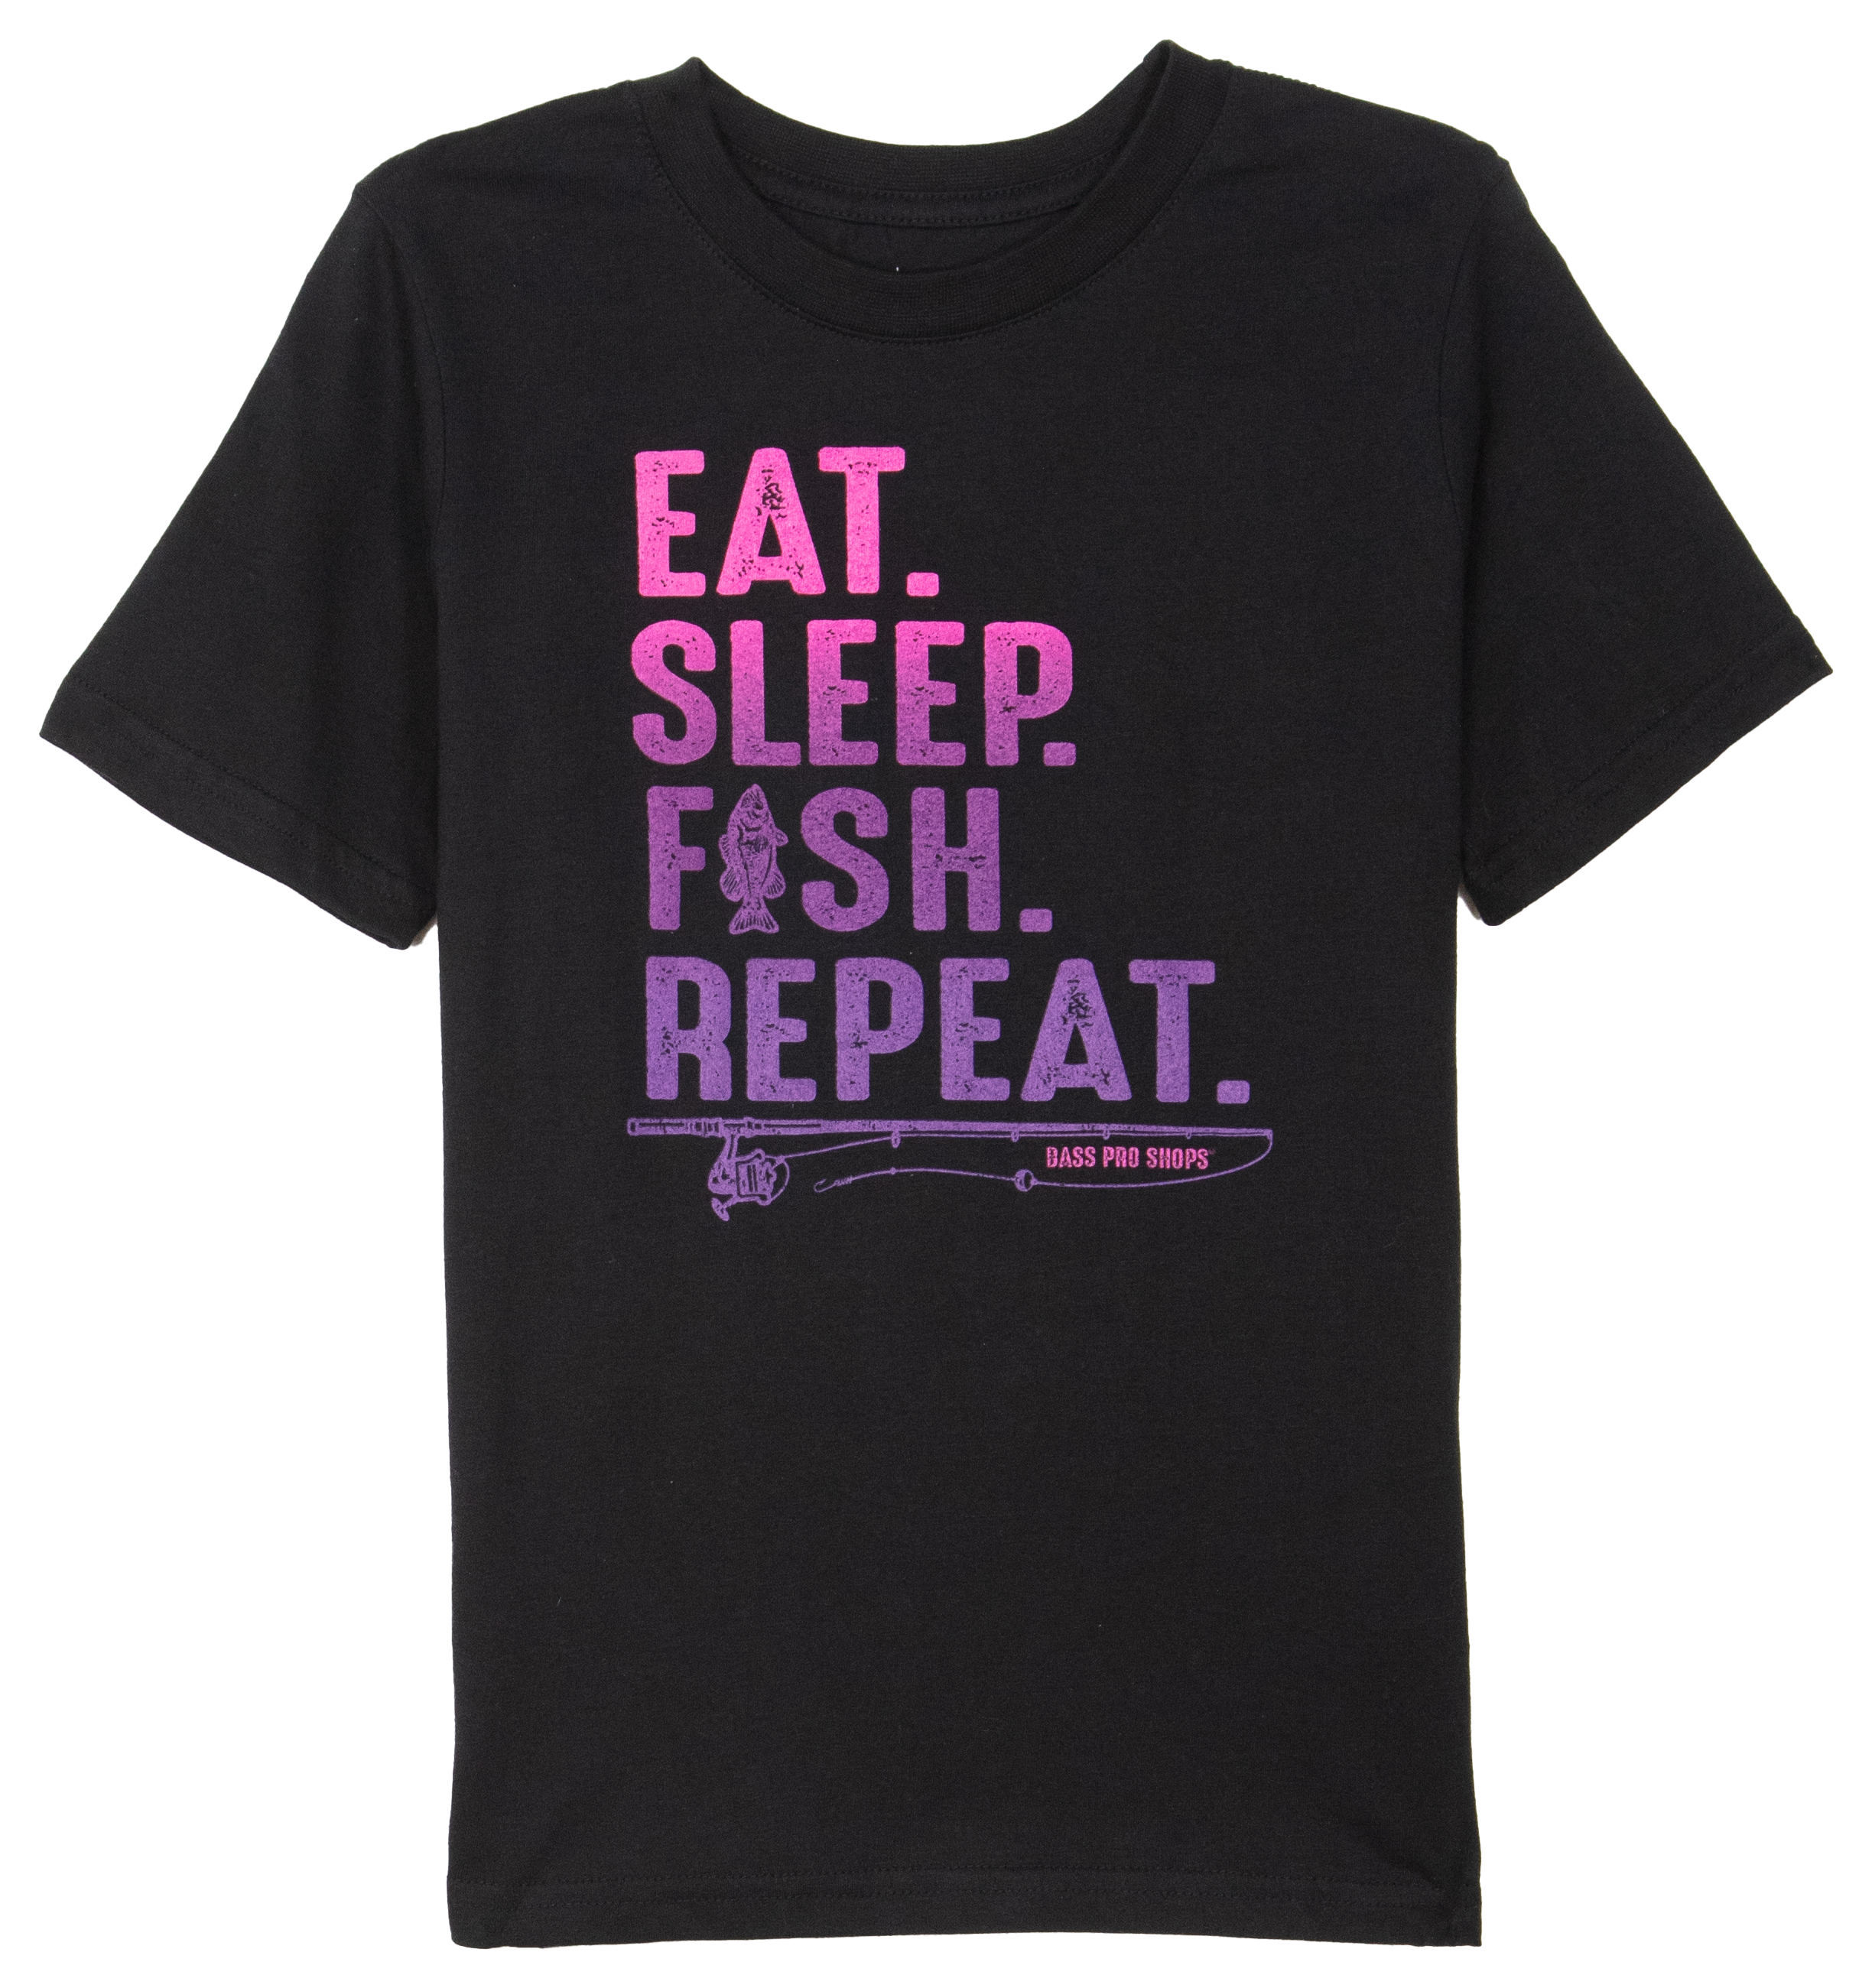 Bass Pro Shops Eat Sleep Fish Short-Sleeve T-Shirt for Girls - Black - S